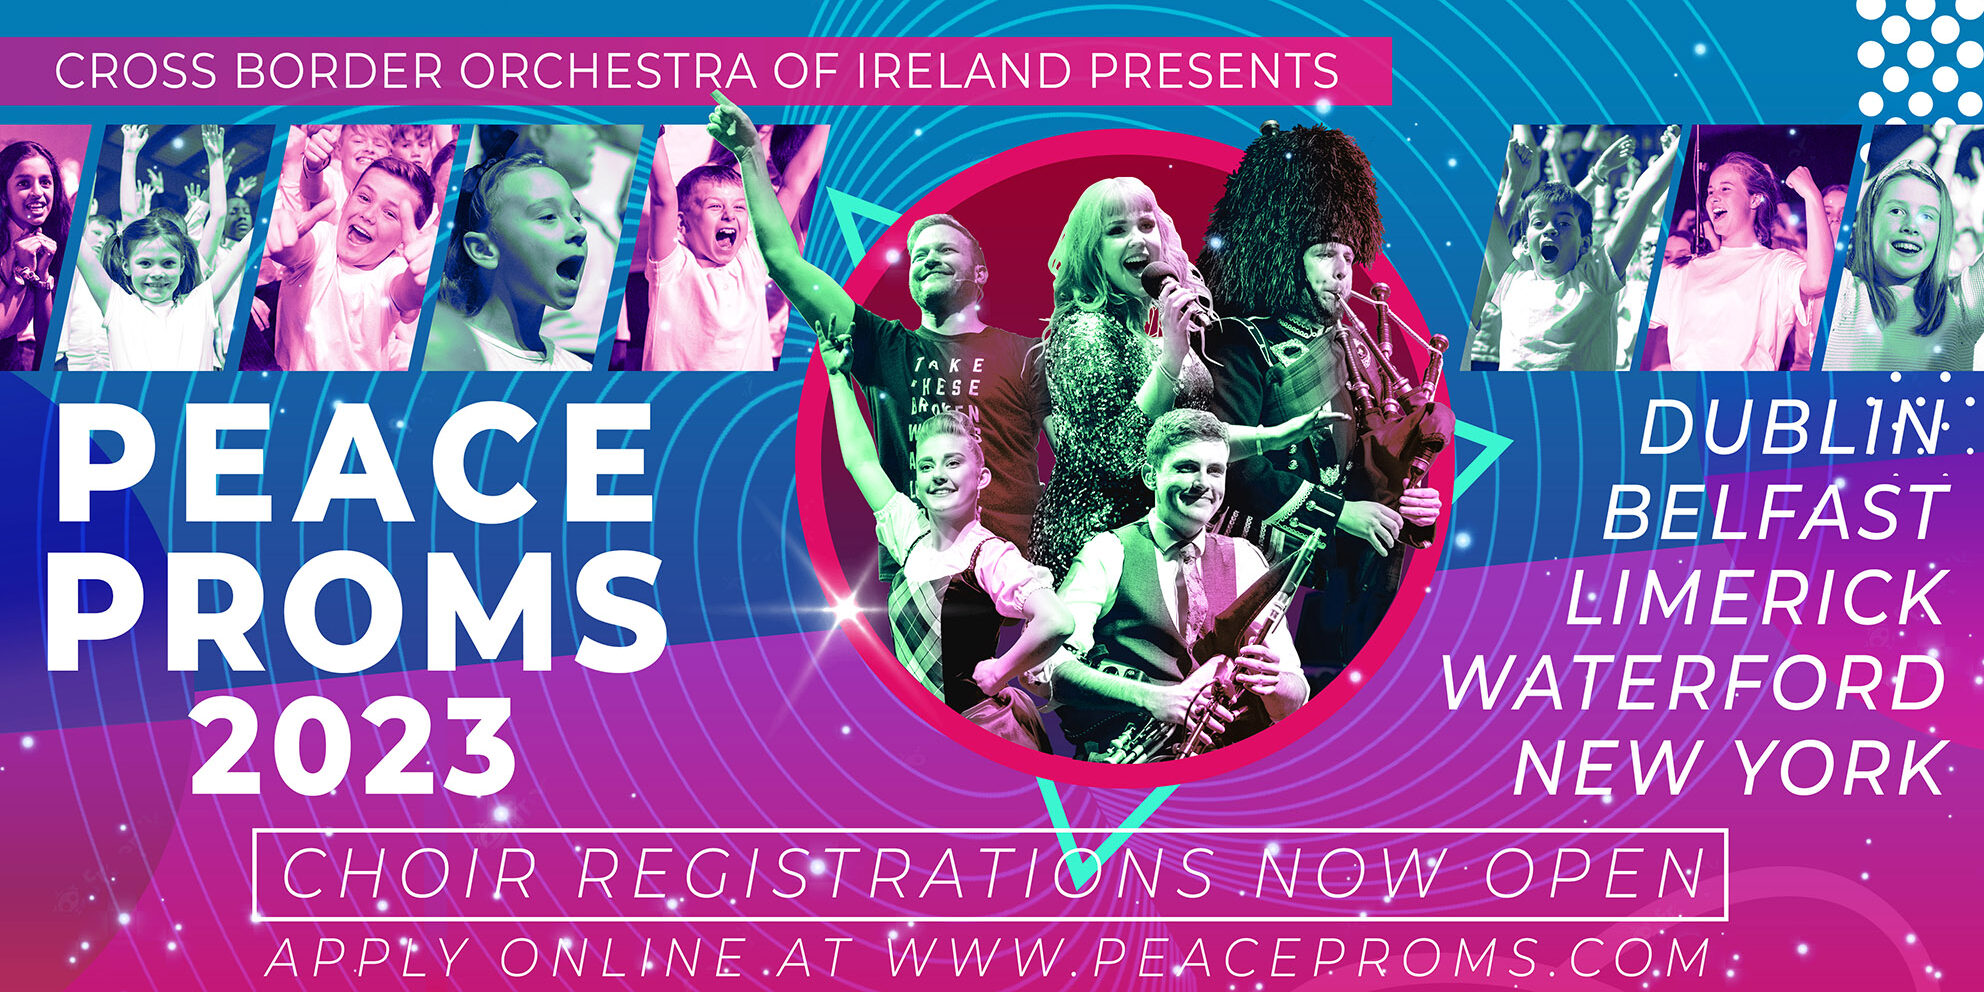 PEACE PROMS 2023 ANNOUNCED!!! – Cross Border Orchestra of Ireland